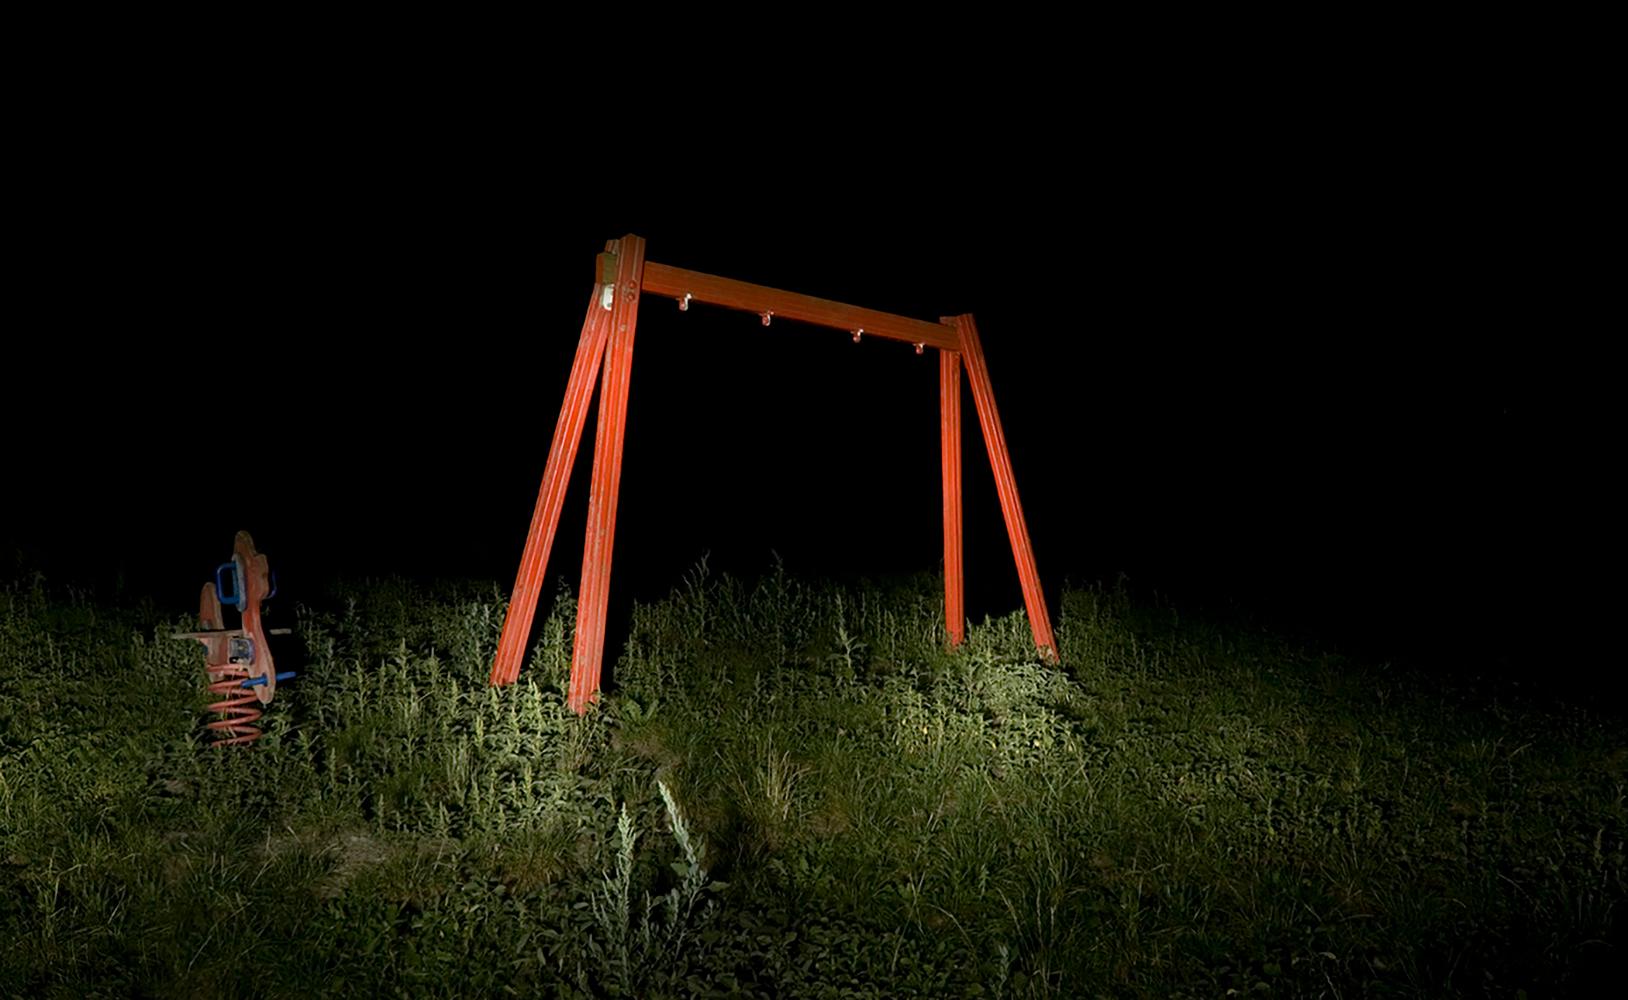 Cristina Fontsare Color Photograph - The red Swing - Contemporary, Landscape, 21st Century, Color, Night